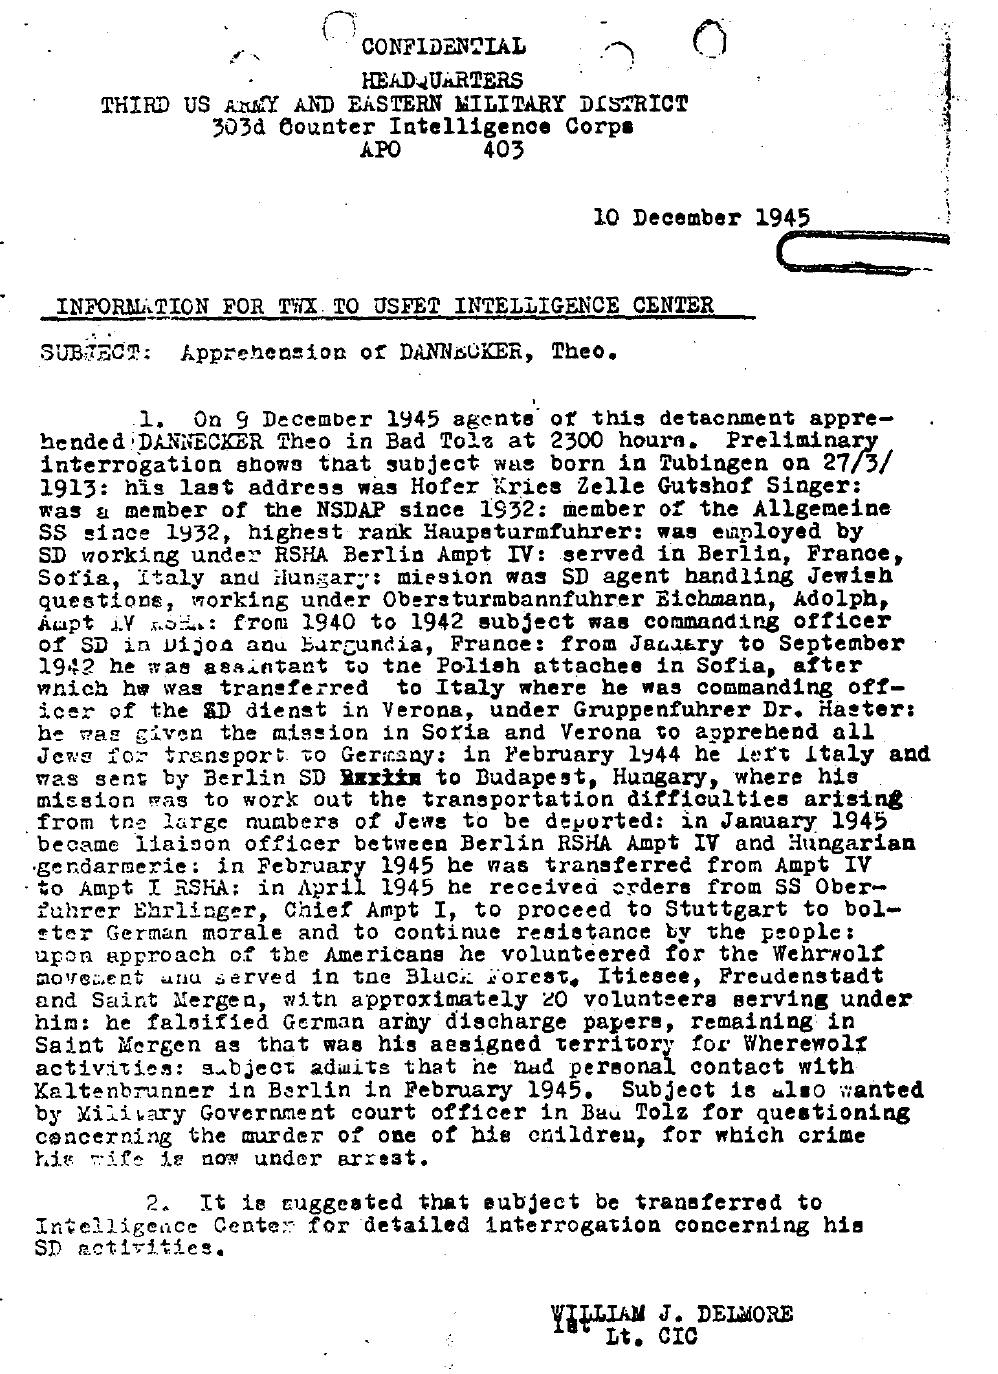 Adolf Eichmann CIA Files Sample Page 1